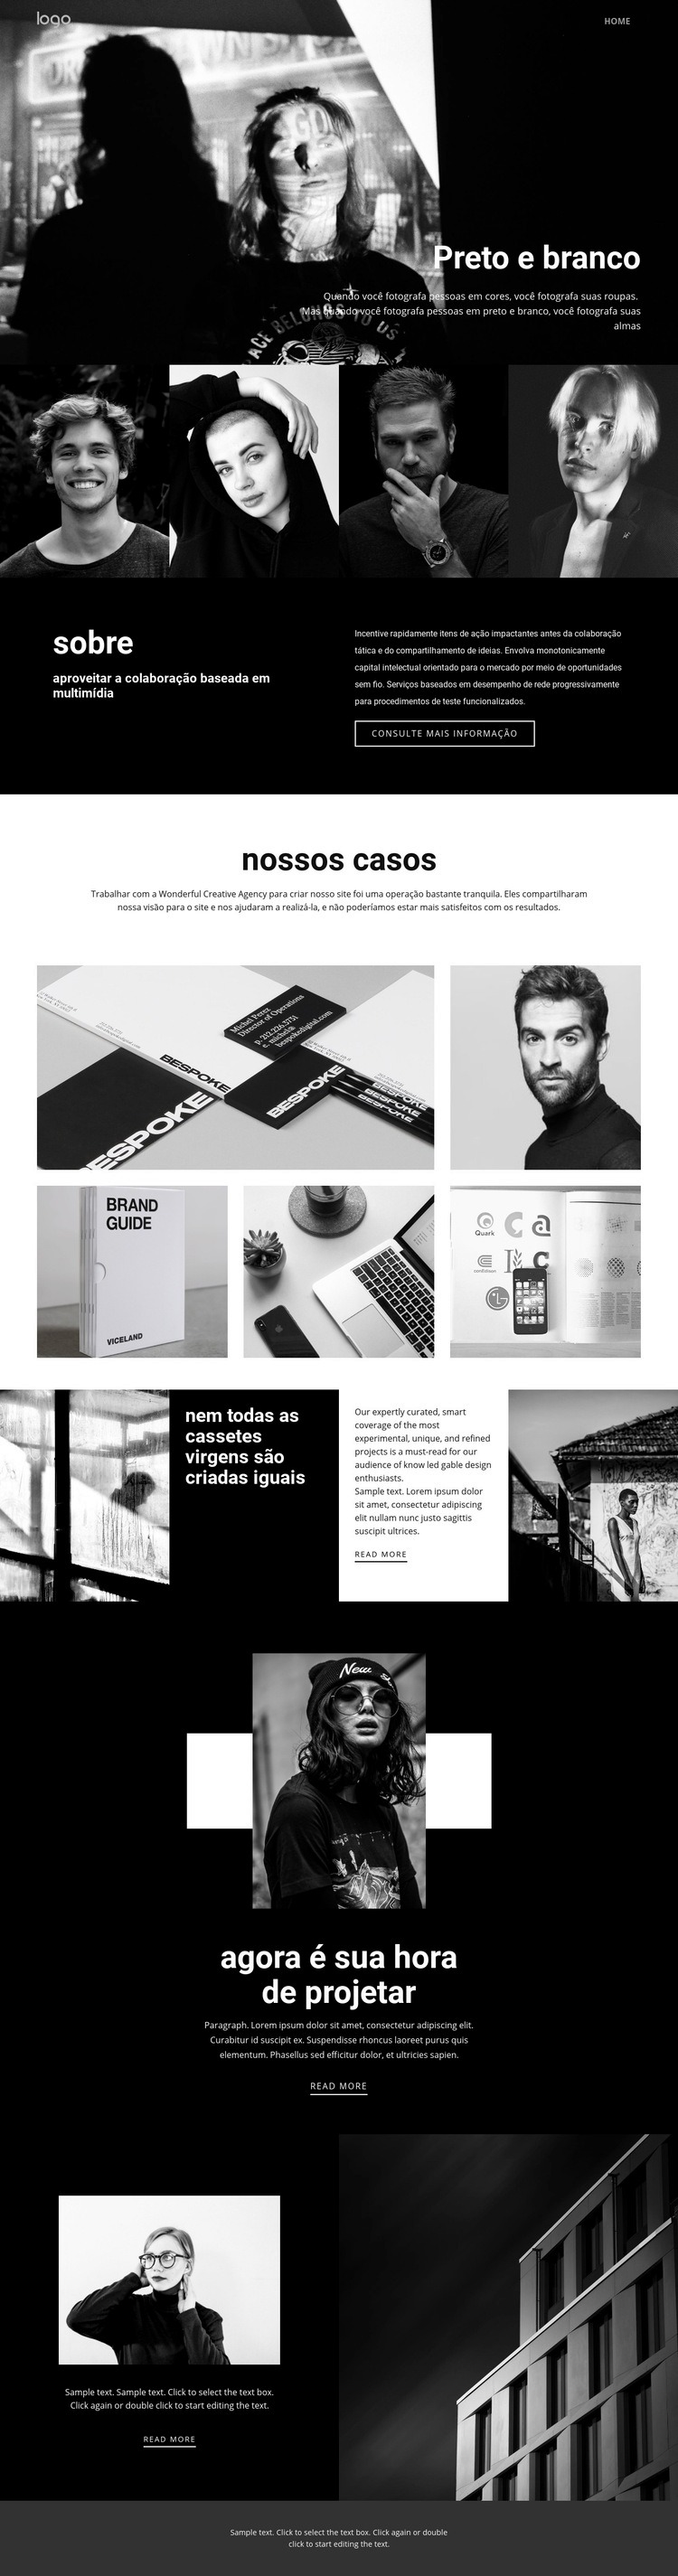 Cores preto e branco da arte Design do site